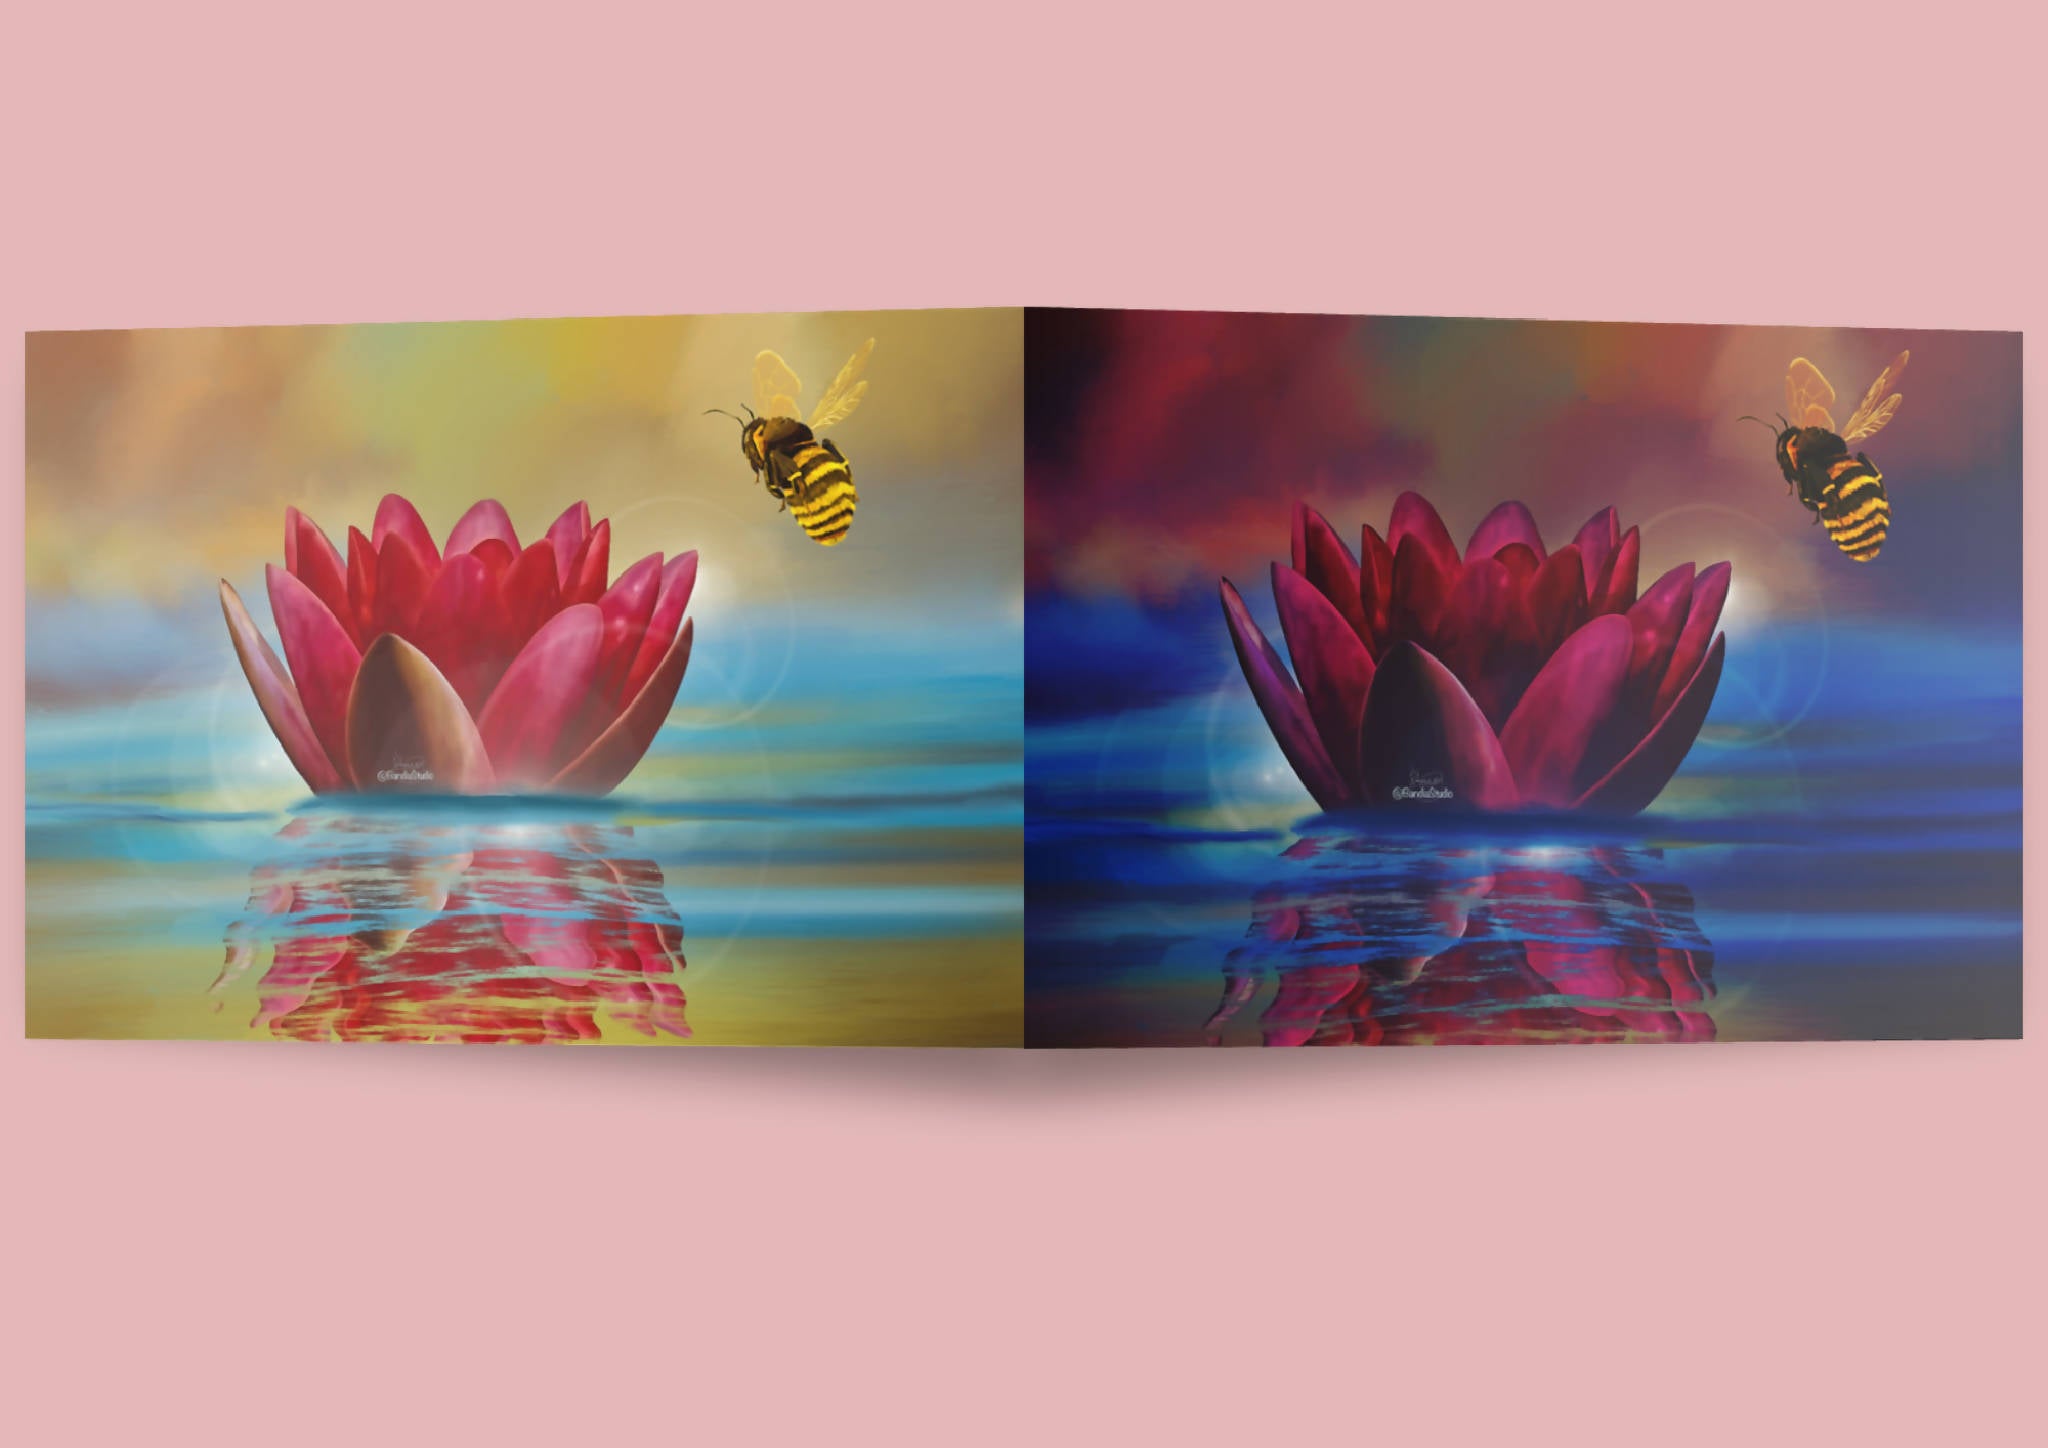 Waterlily and Bee Ocean Reflection | Digital Art Print | Midnight Halloween Decoration | Christmas Gift Ideas